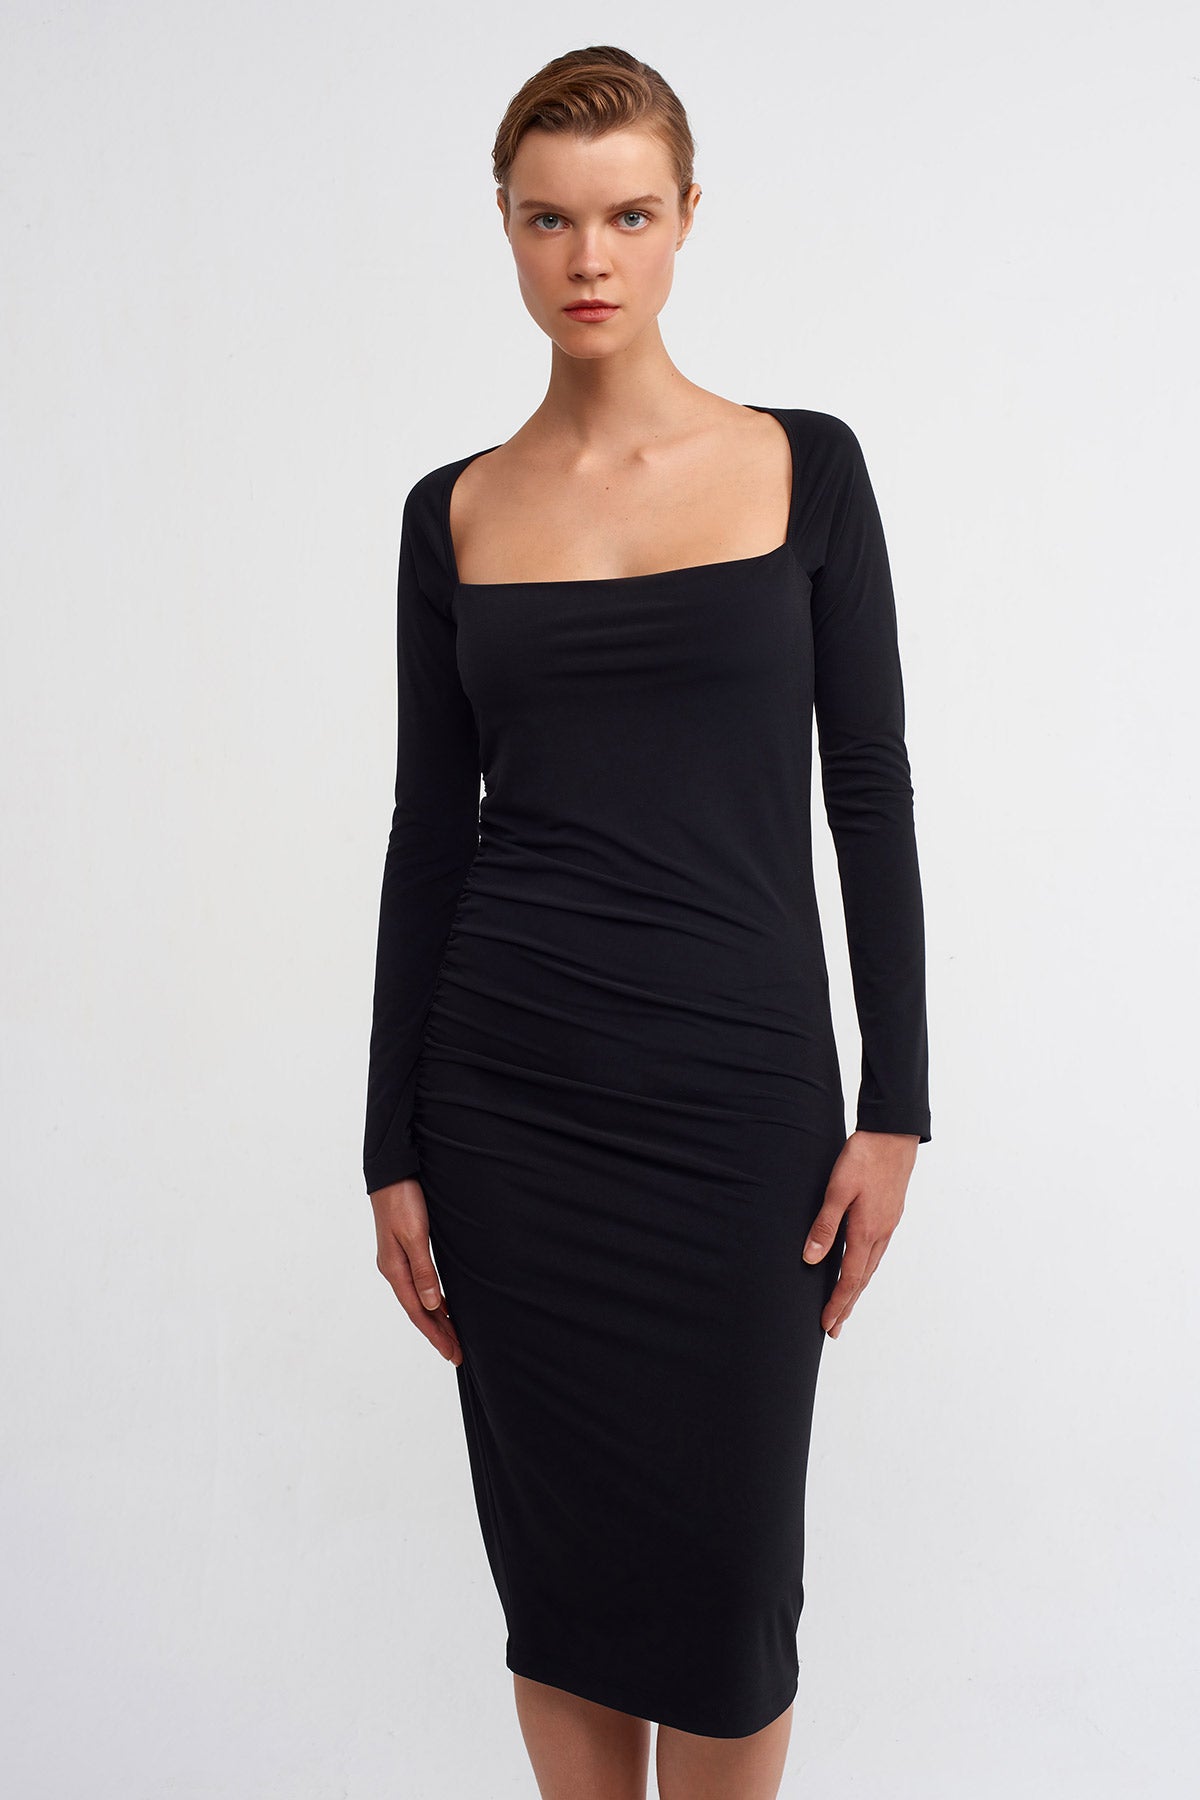 Black Square Neck, Long Sleeve Ruched Dress-K234014082